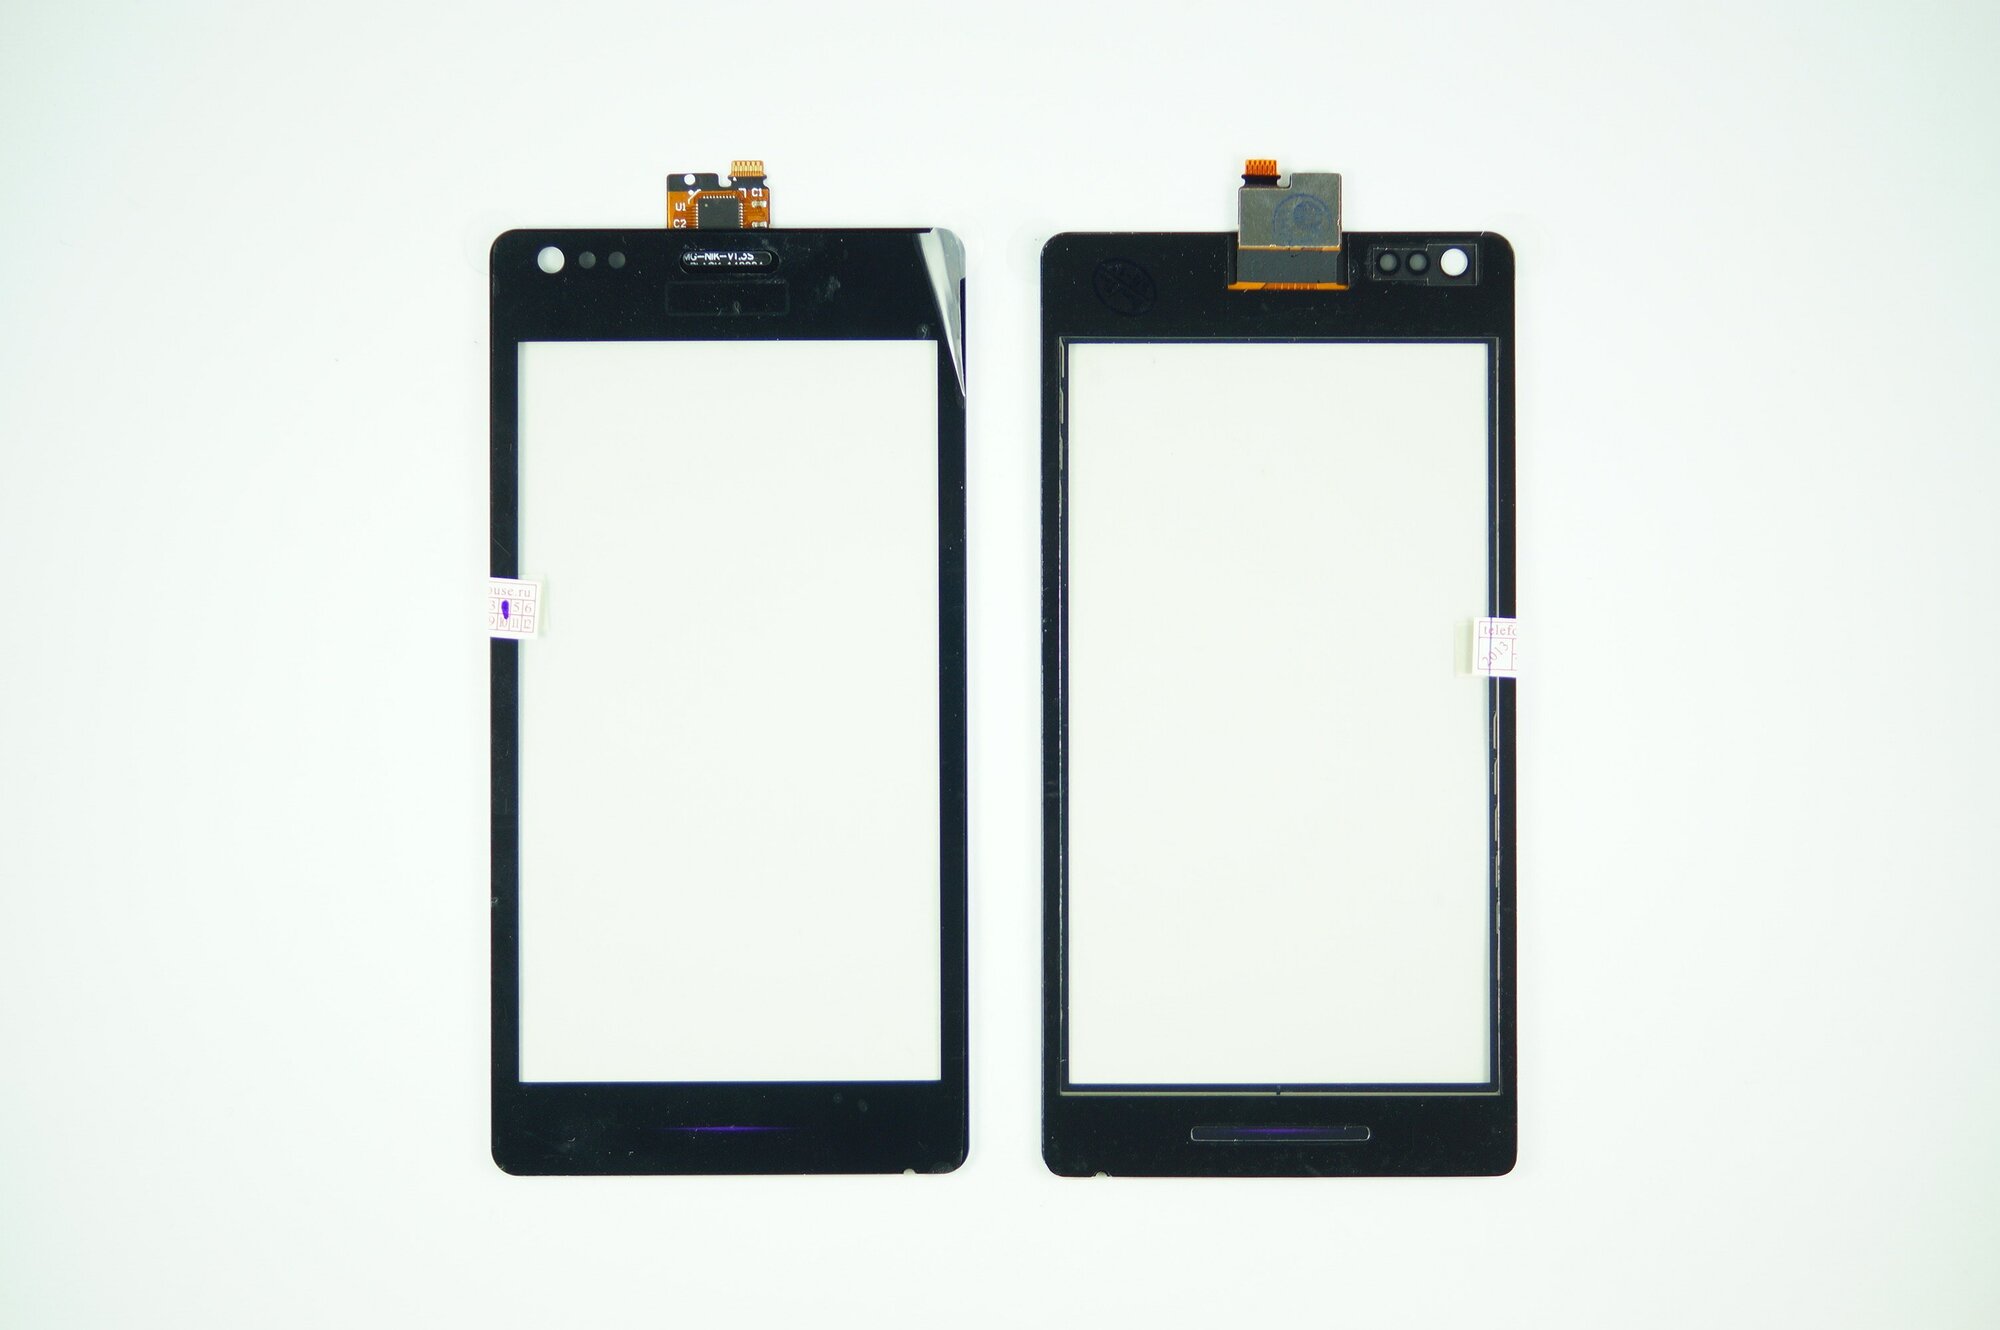 Тачскрин для Sony Xperia M C1905/C2005 black